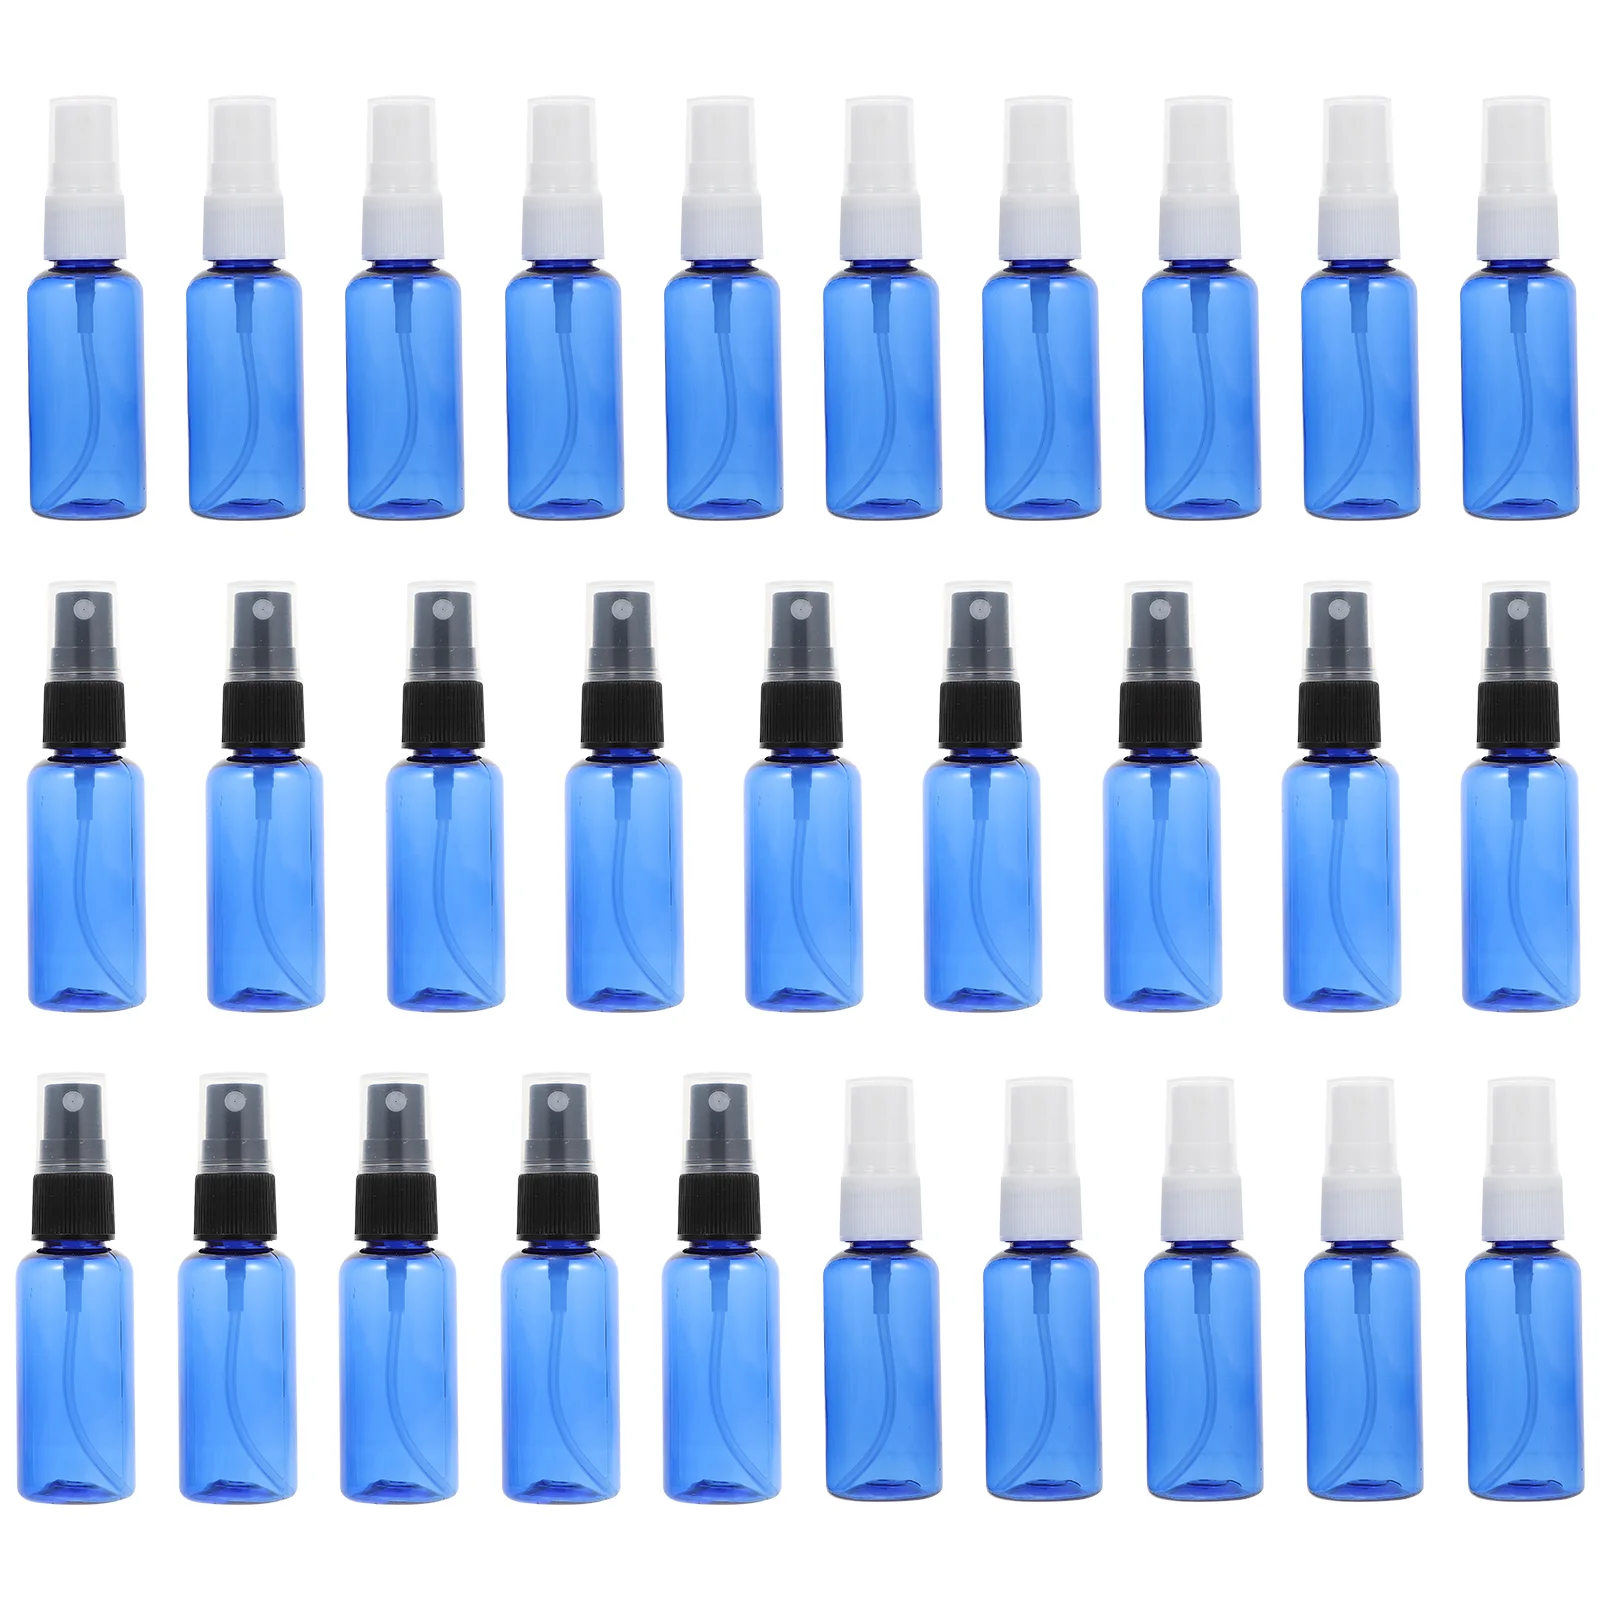 

30 Pcs 50mll Spray Bottle PET Sub Leak Proof Travel Containers Dispensers Bar Soap Empty Bottles Sprayer Refillable Jars